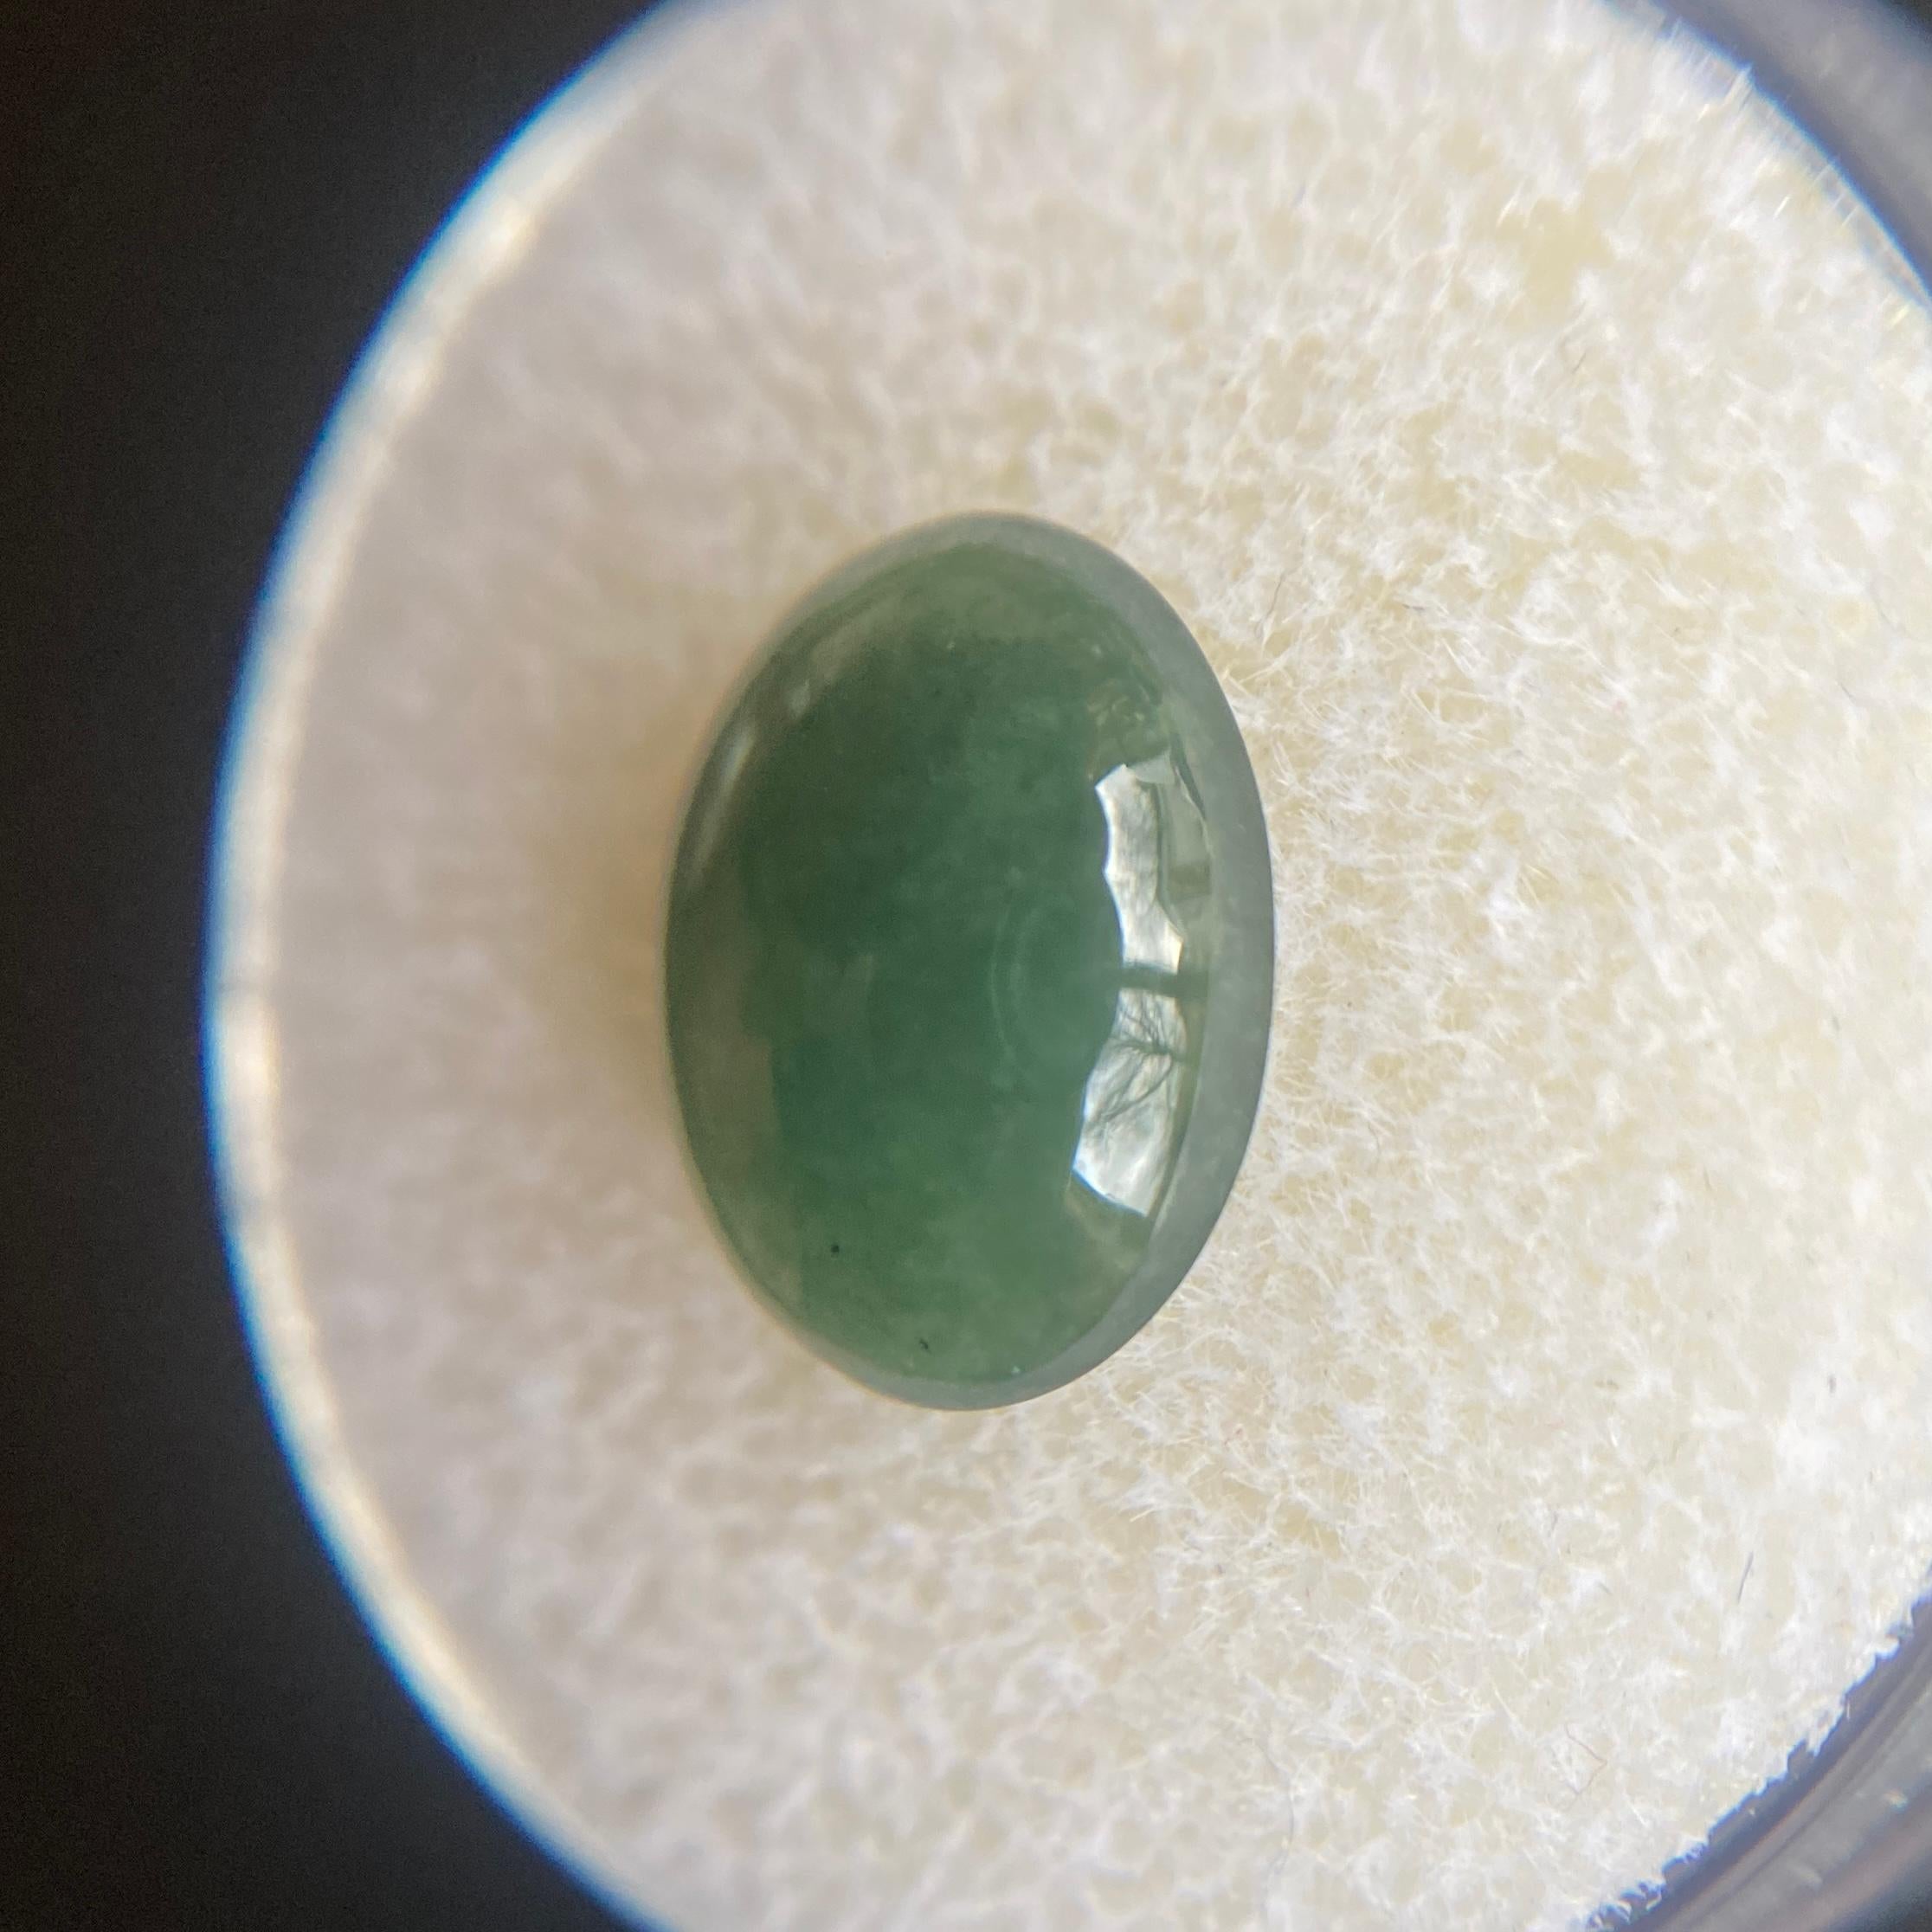 Oval Cut GIA Certified Jadeite Jade ‘A’ Grade 3.38 Carat Deep Green Oval Cabochon Cut Gem